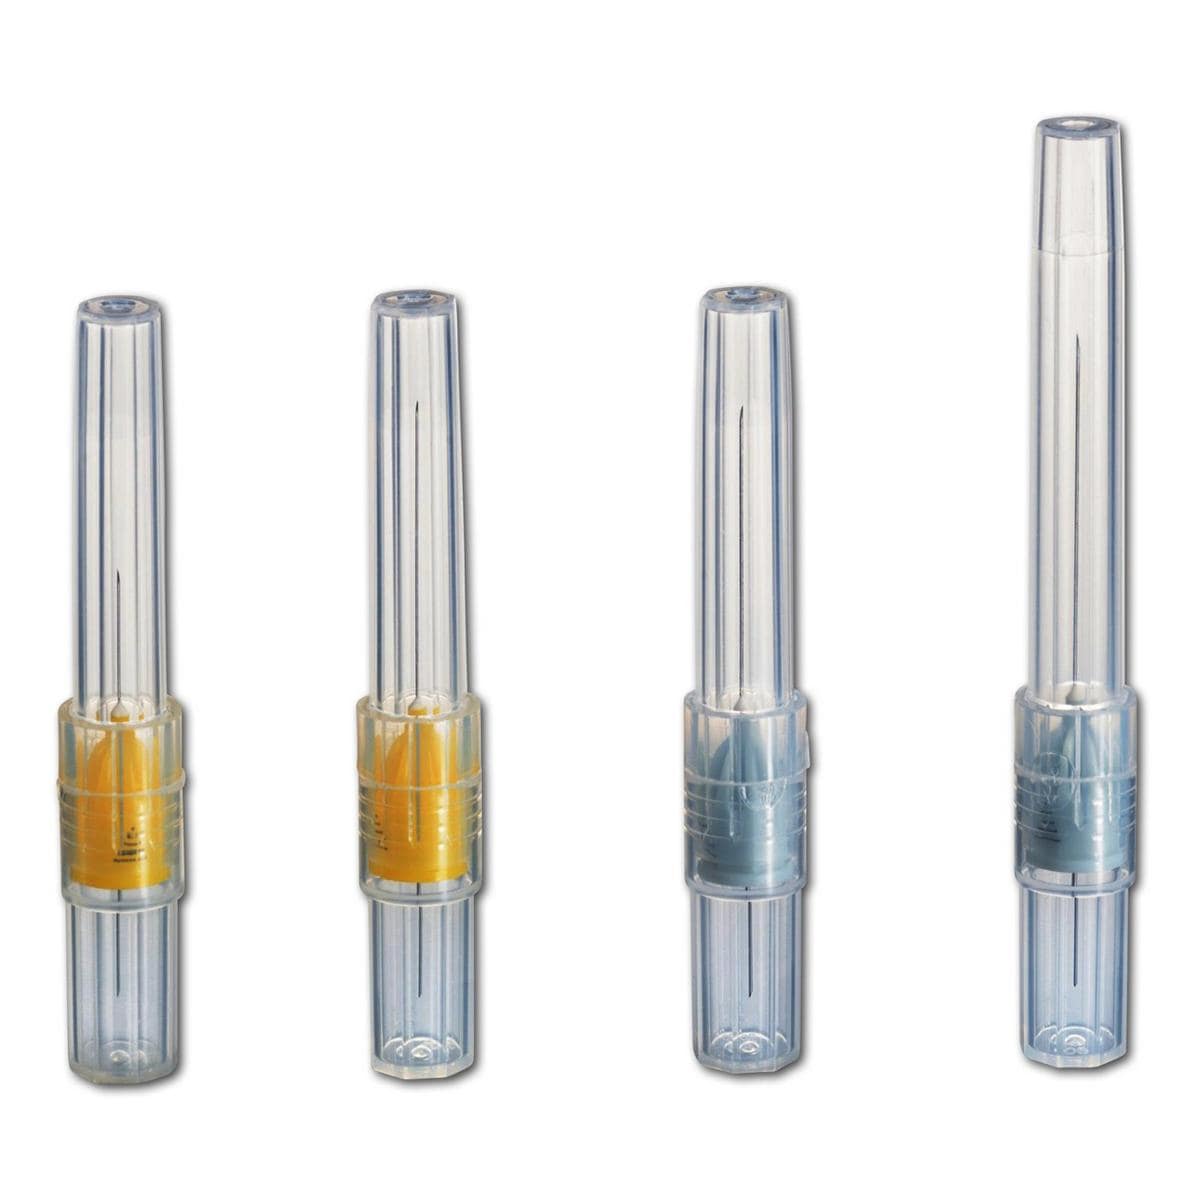 3M Inject Needles / Injektionskanülen - 30G, 0,3 x 25 mm, kurz, Packung 100 Stück